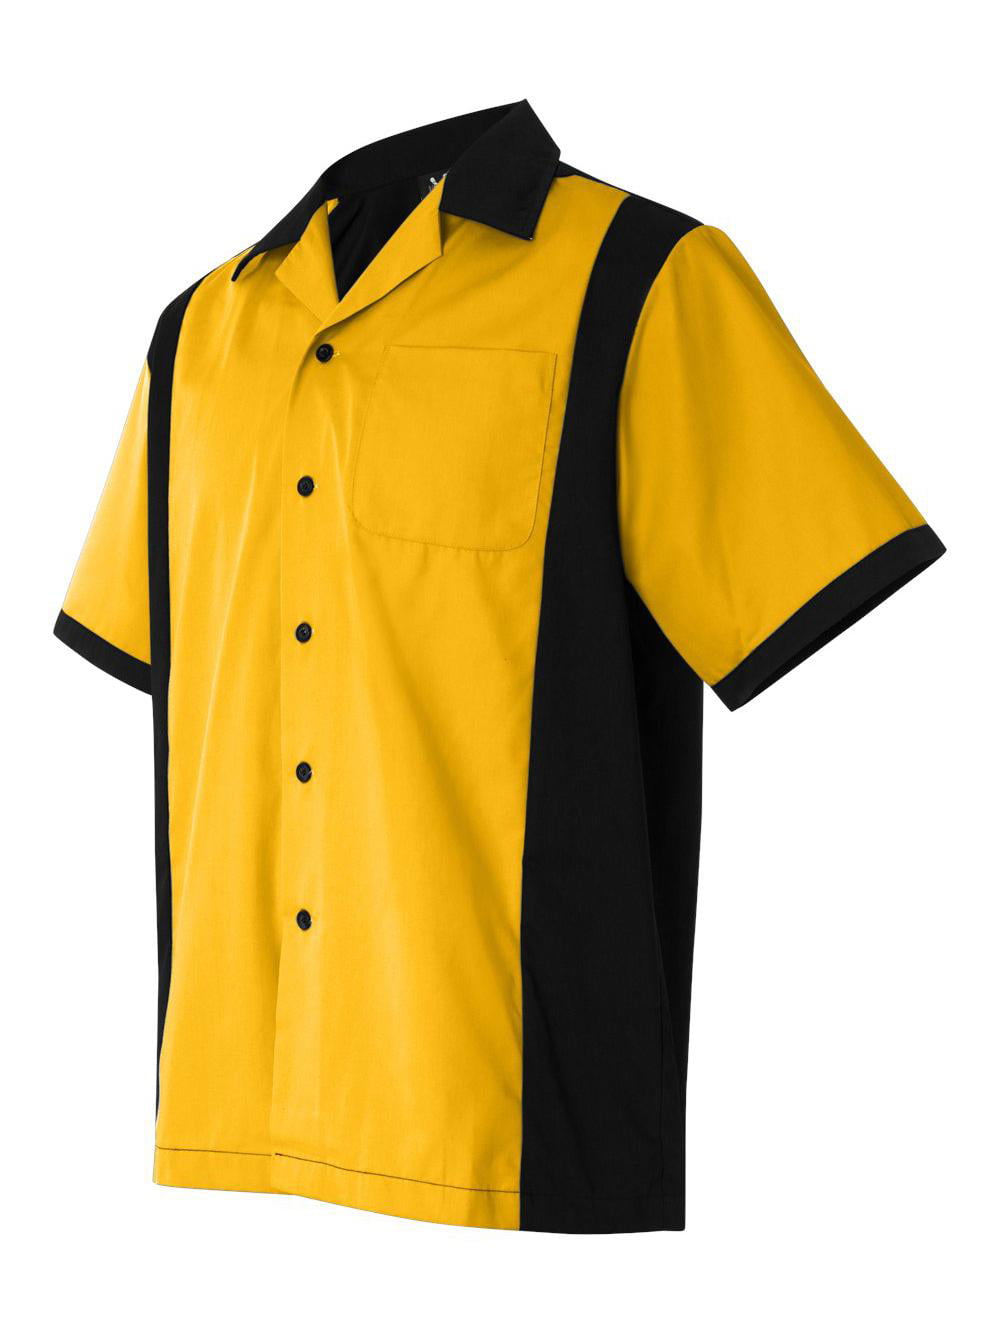 Cruiser Bowling Shirt - HP2243 - Walmart.com